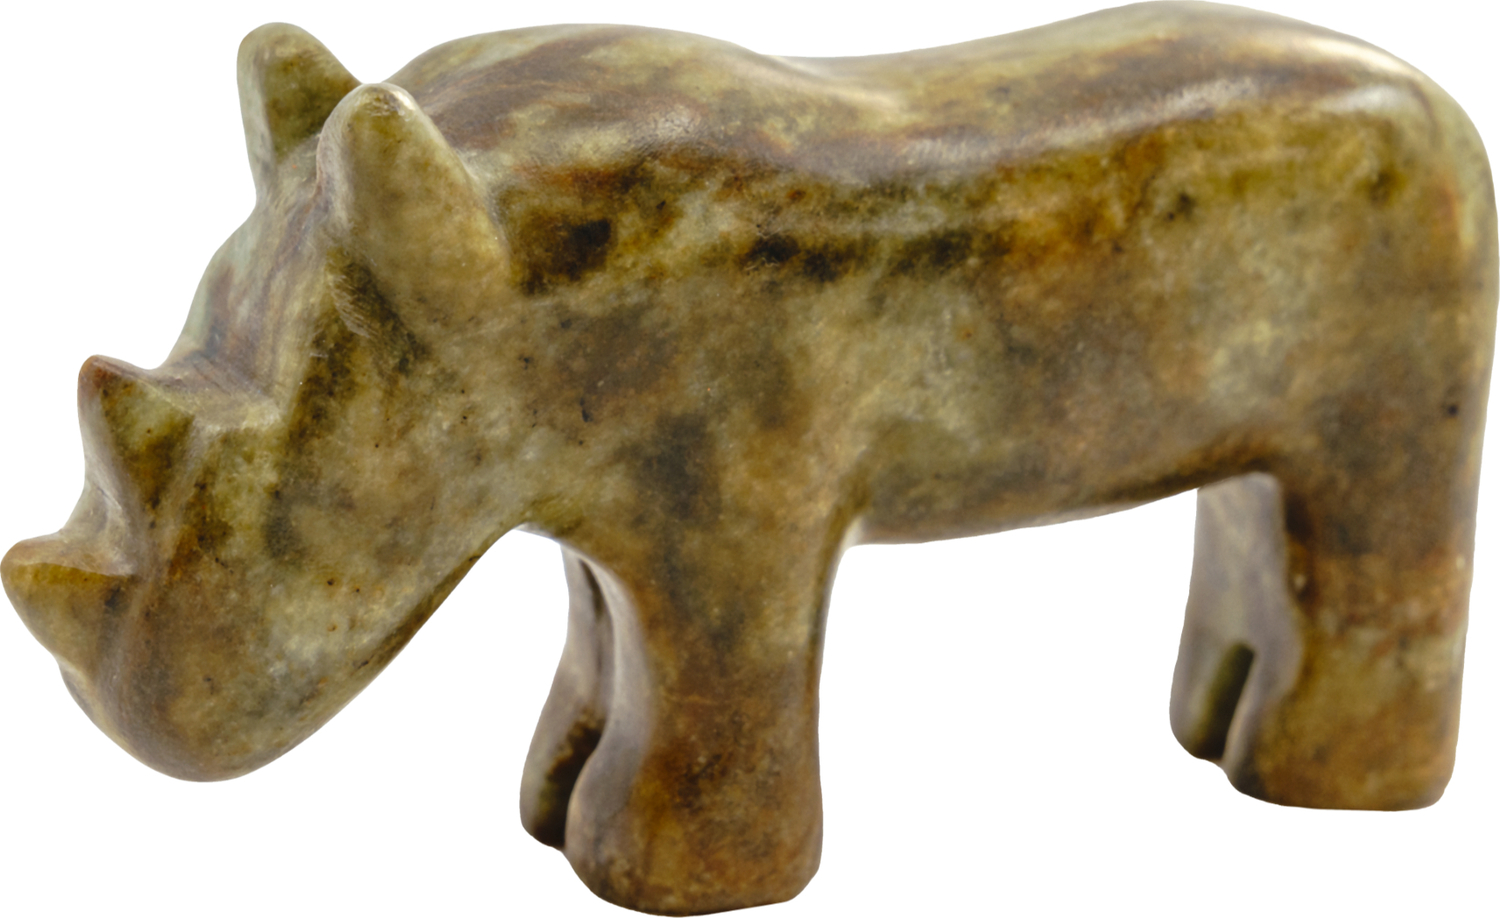 Rhino Soapstone Carving Kit from Studiostone - School Crossing